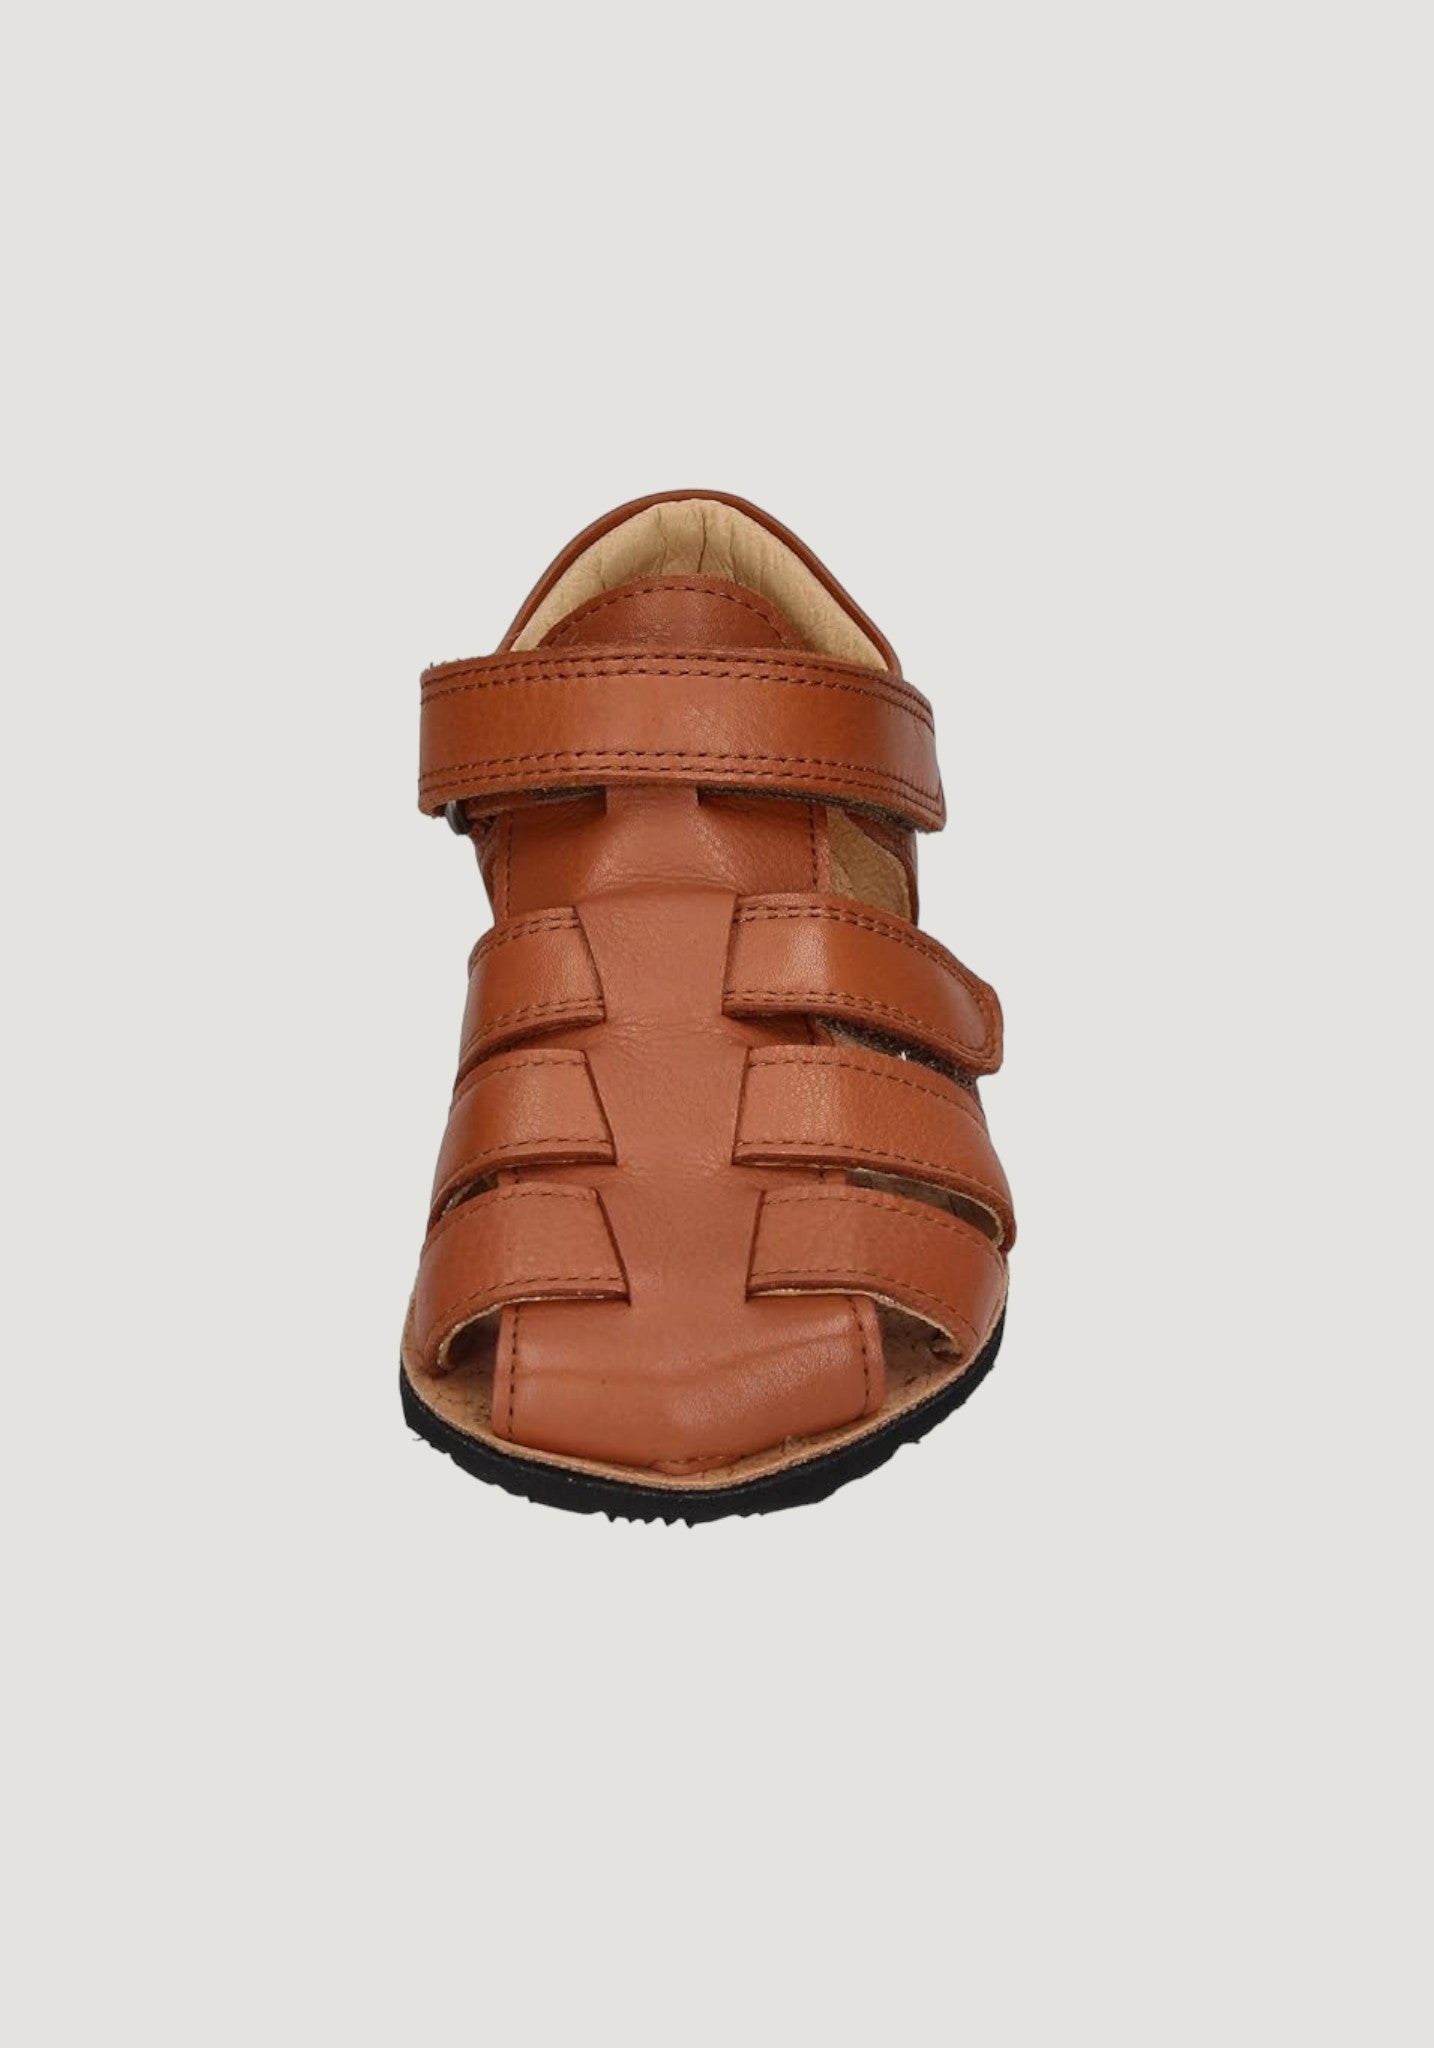 Sandale Barefoot din piele - Arin Cognac Koel HipHip.ro